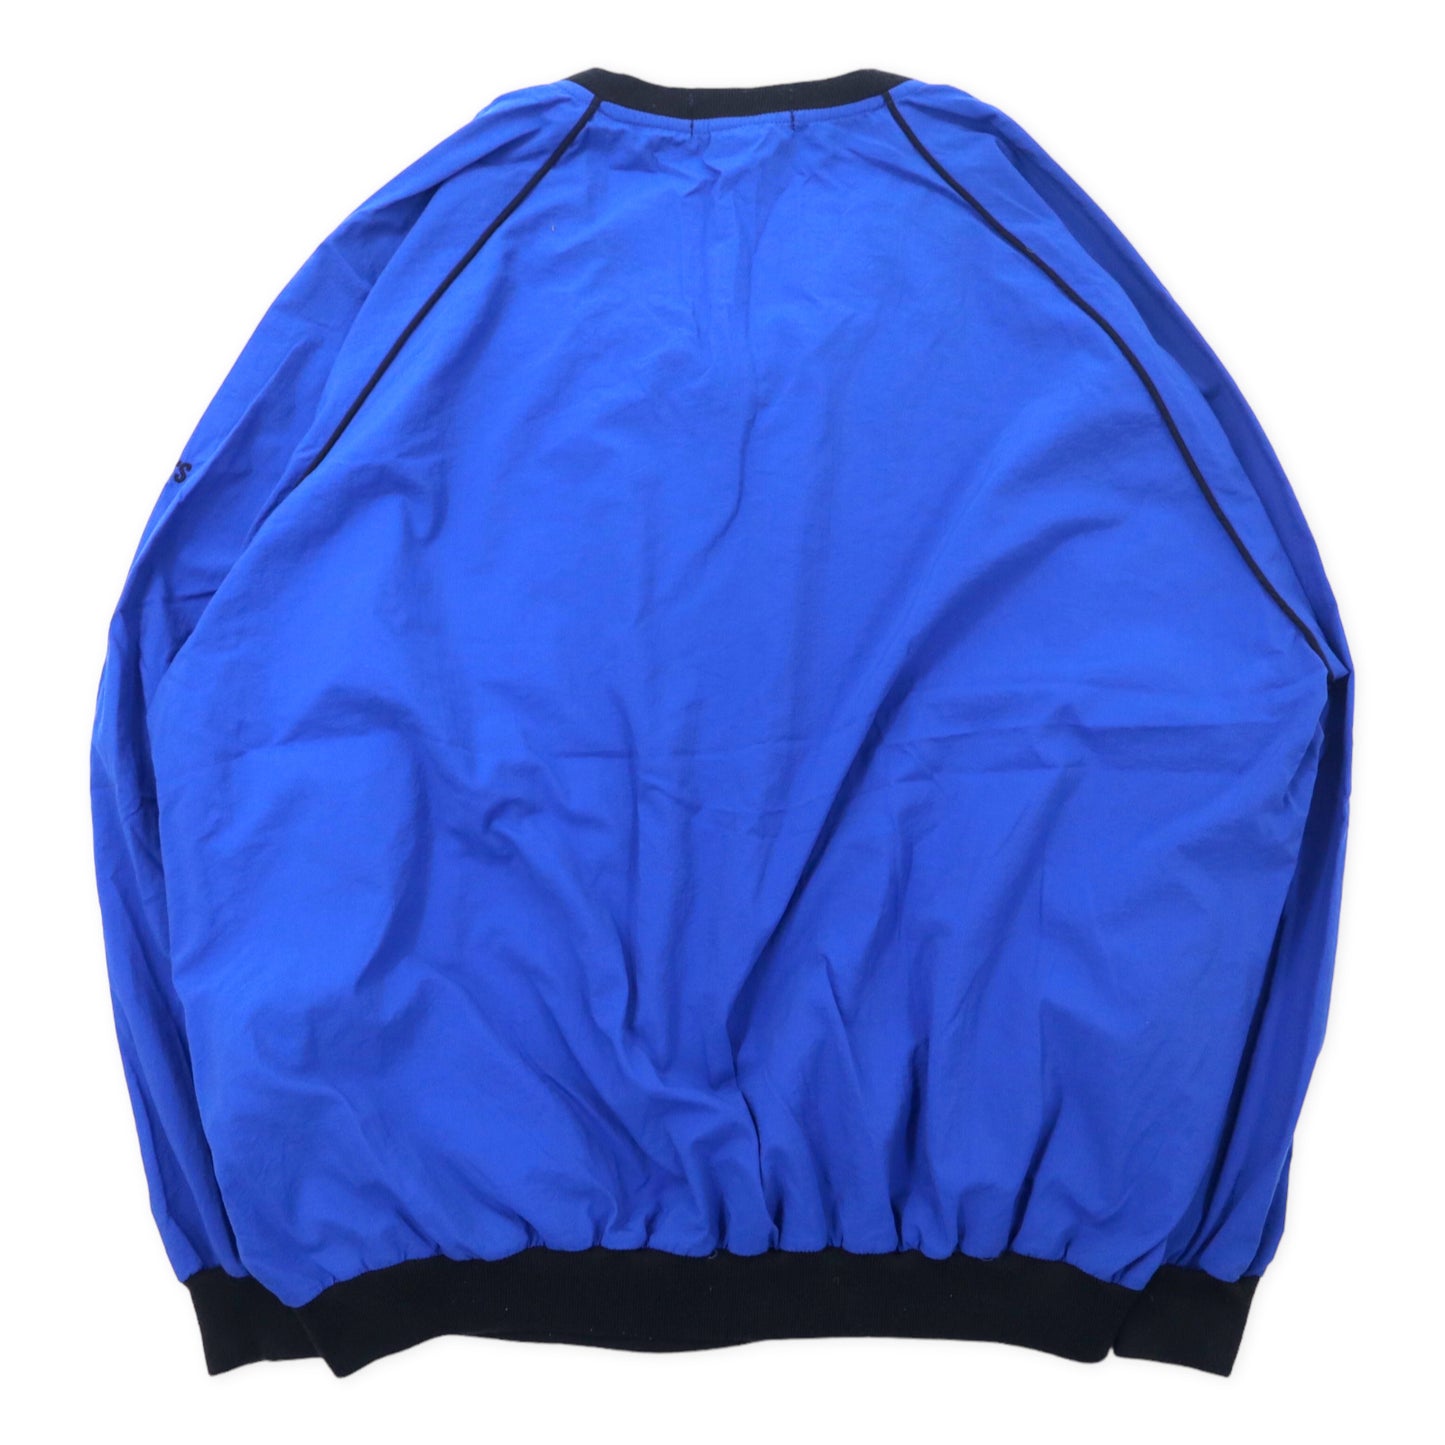 LA MODE USA製 ピステ プルオーバー ナイロンジャケット XL ブルー ナイロン ビッグサイズ